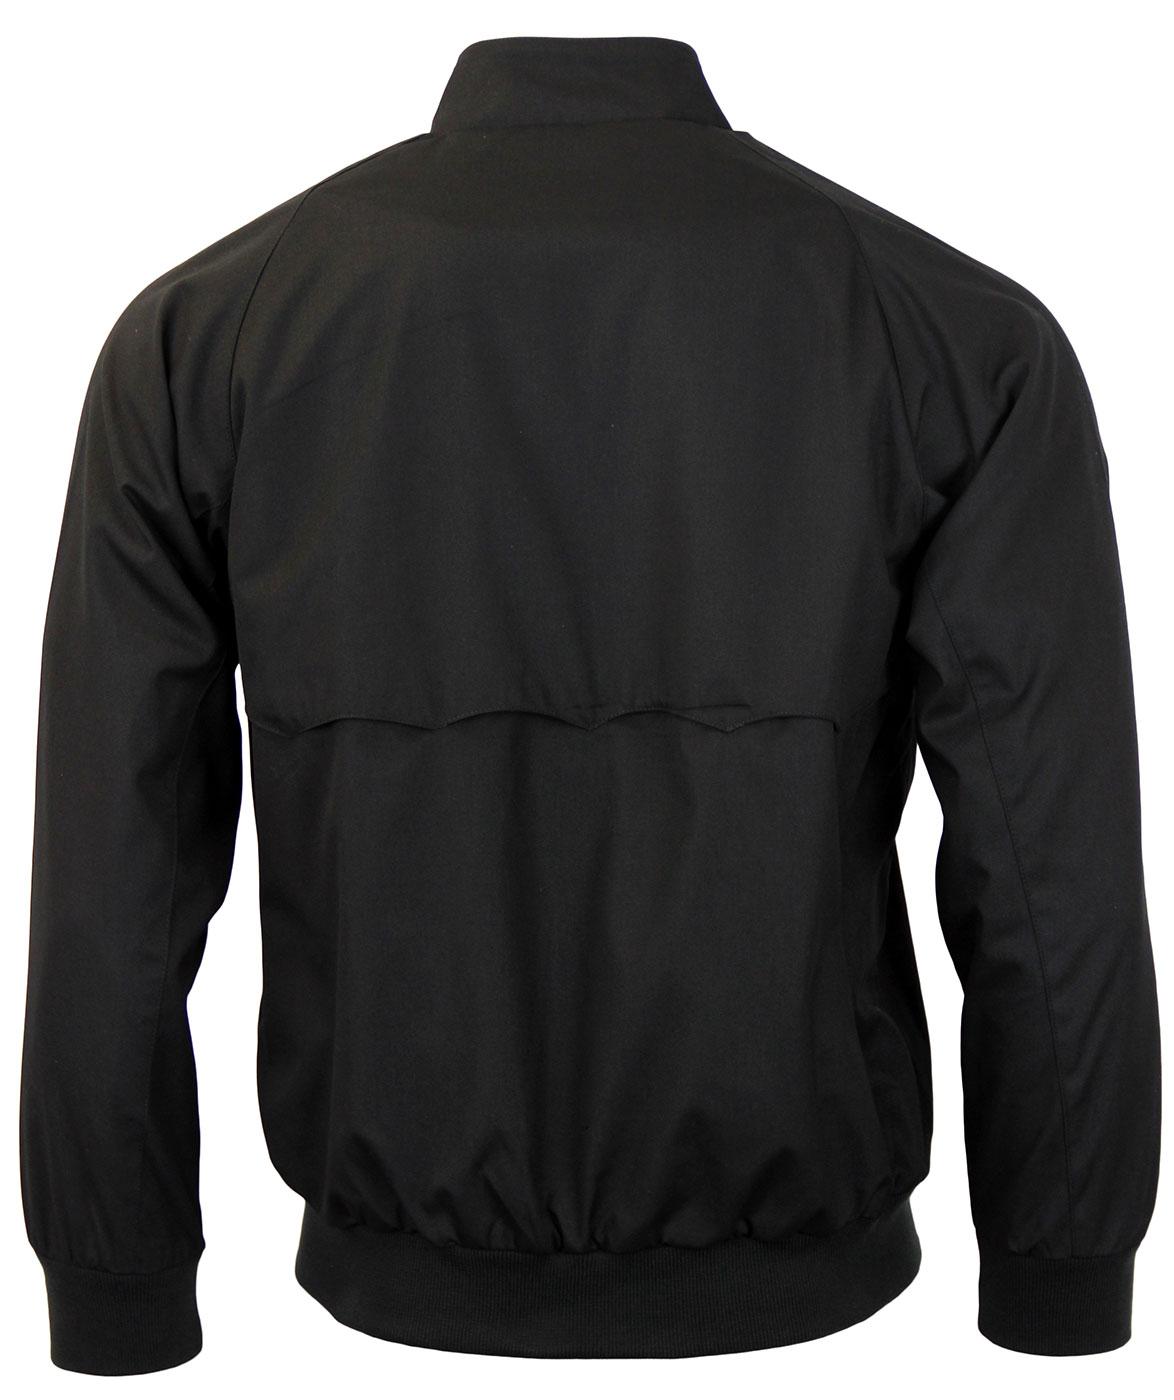 TROJAN Retro Mod Tartan Lined Harrington Jacket in Black